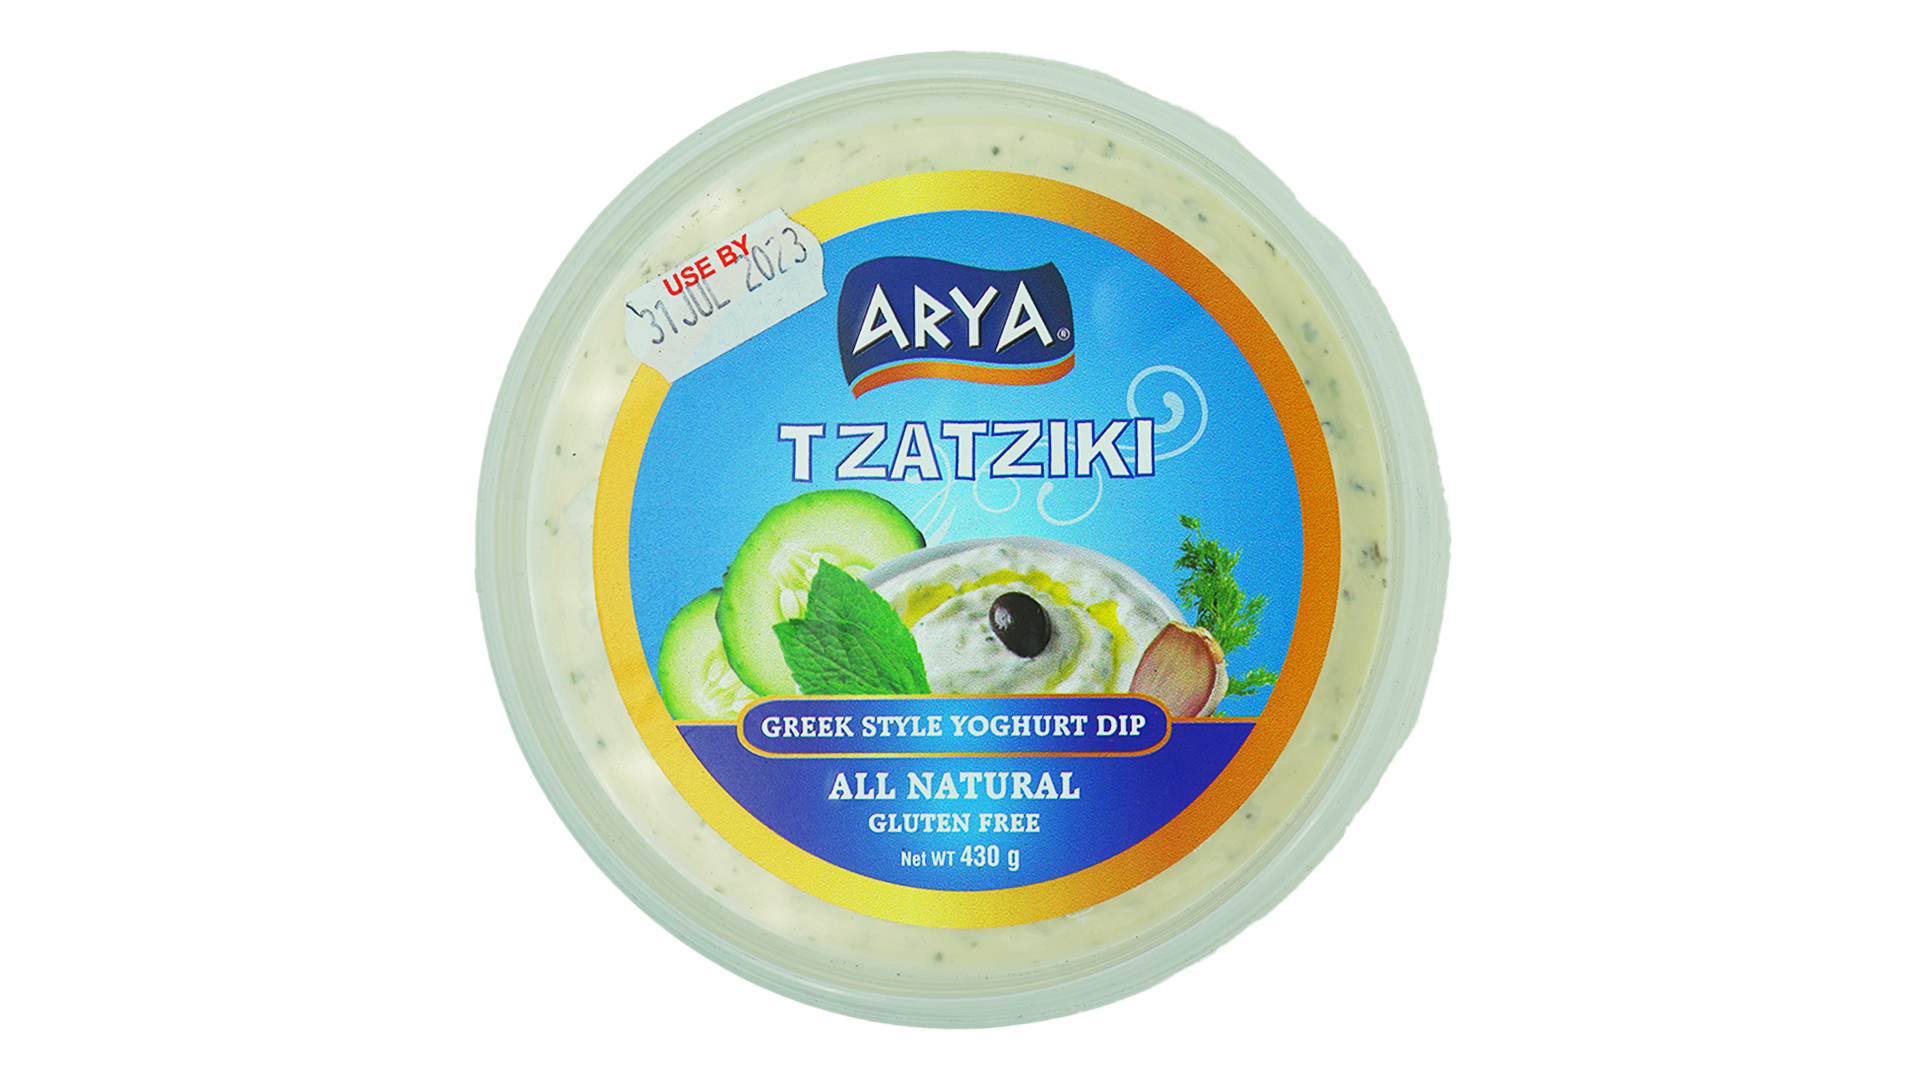 Arya tzatziki greek style yoghurt dip 430g 1